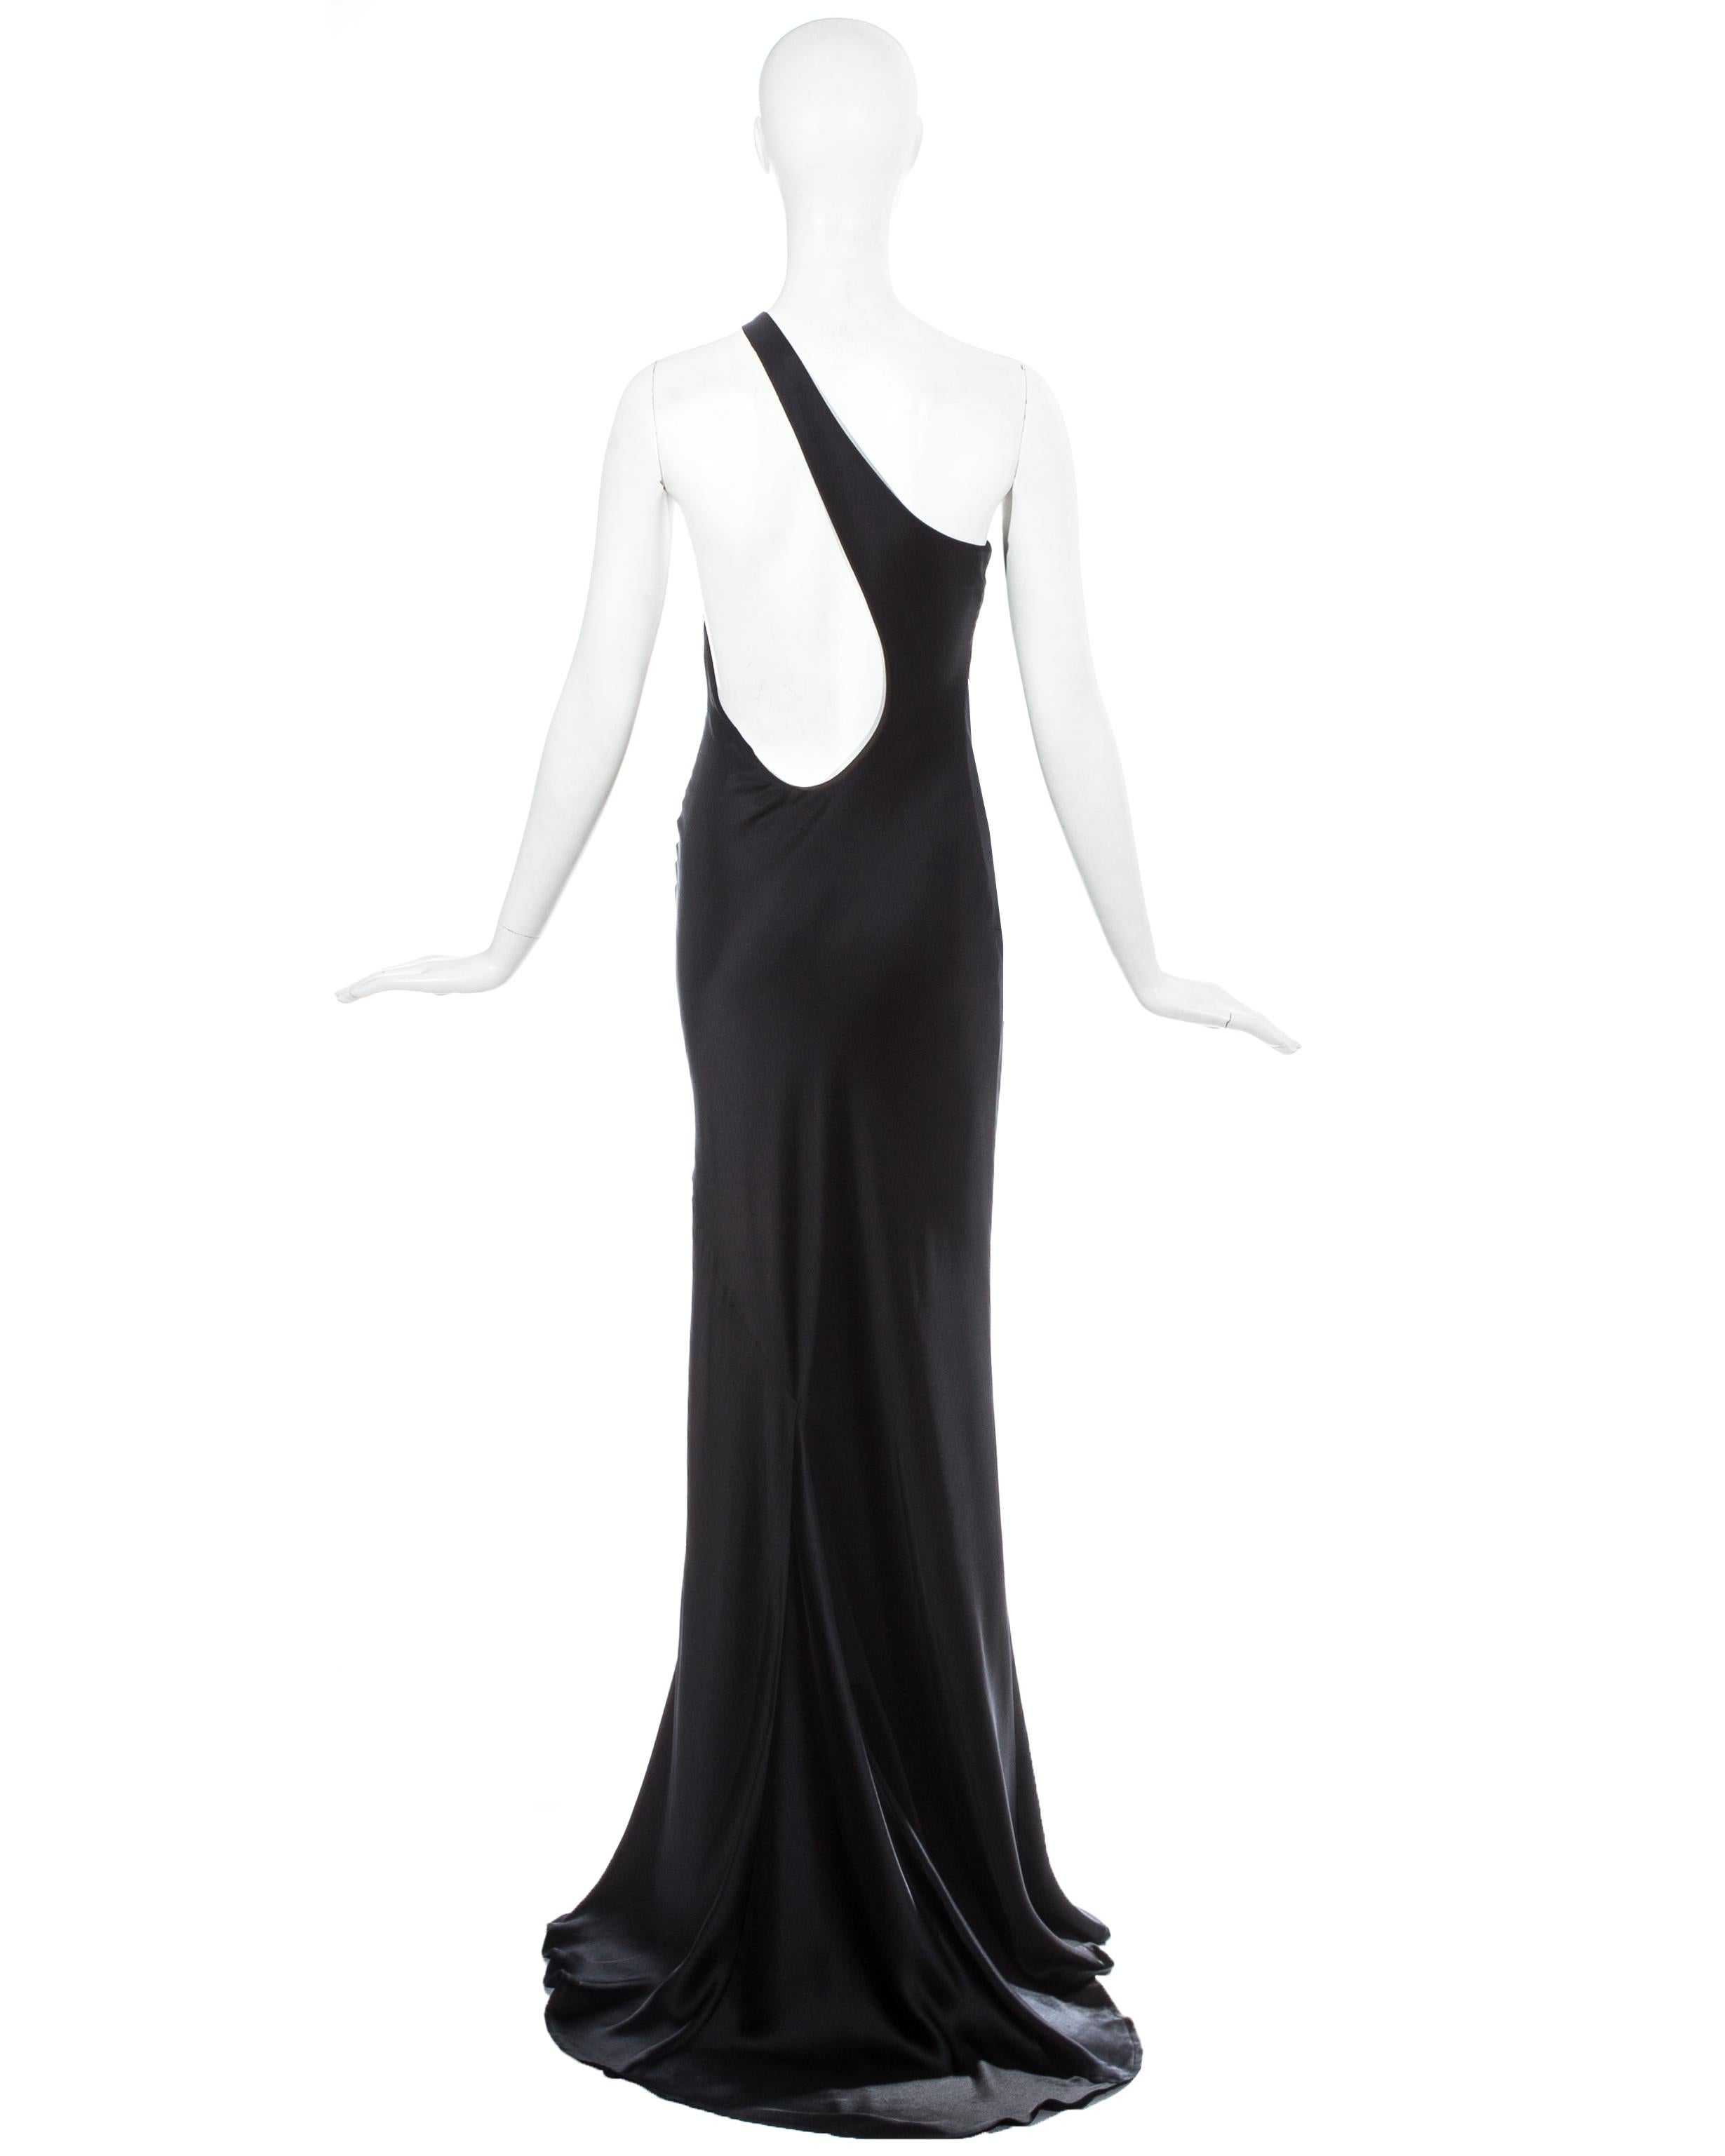 Gucci by Tom Ford  black silk bias cut one-shoulder evening dress

Spring-Summer 2000